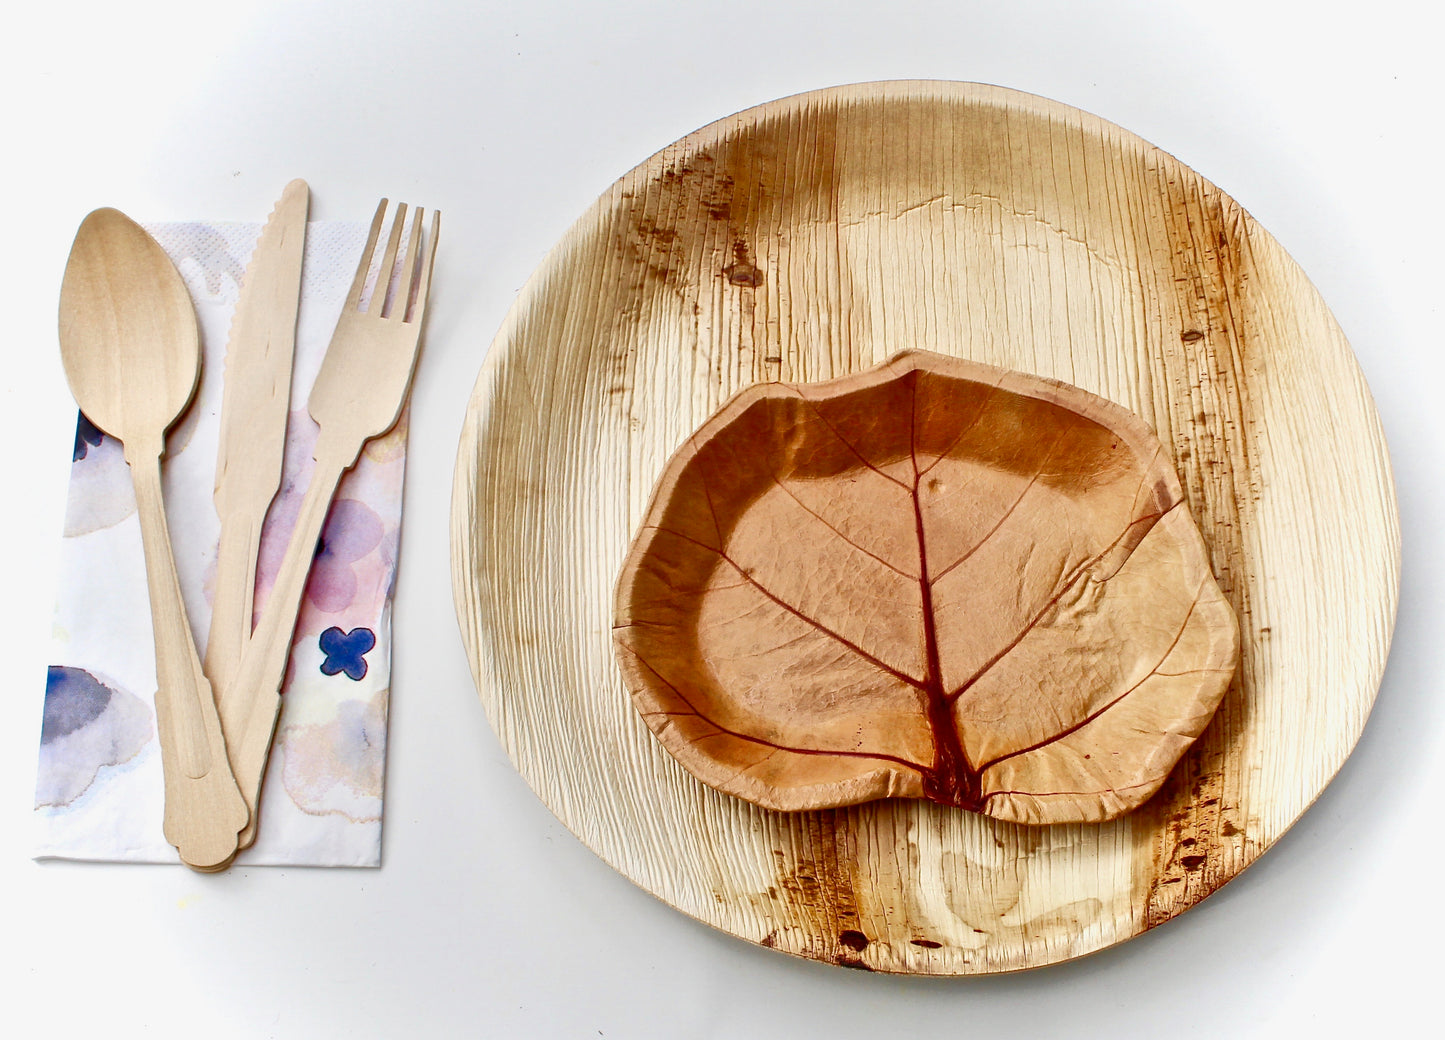 palm leaf plates 20 pic Square 10" and 20 pic Sea Grape 7" dessert plate disposable - Biodergadable